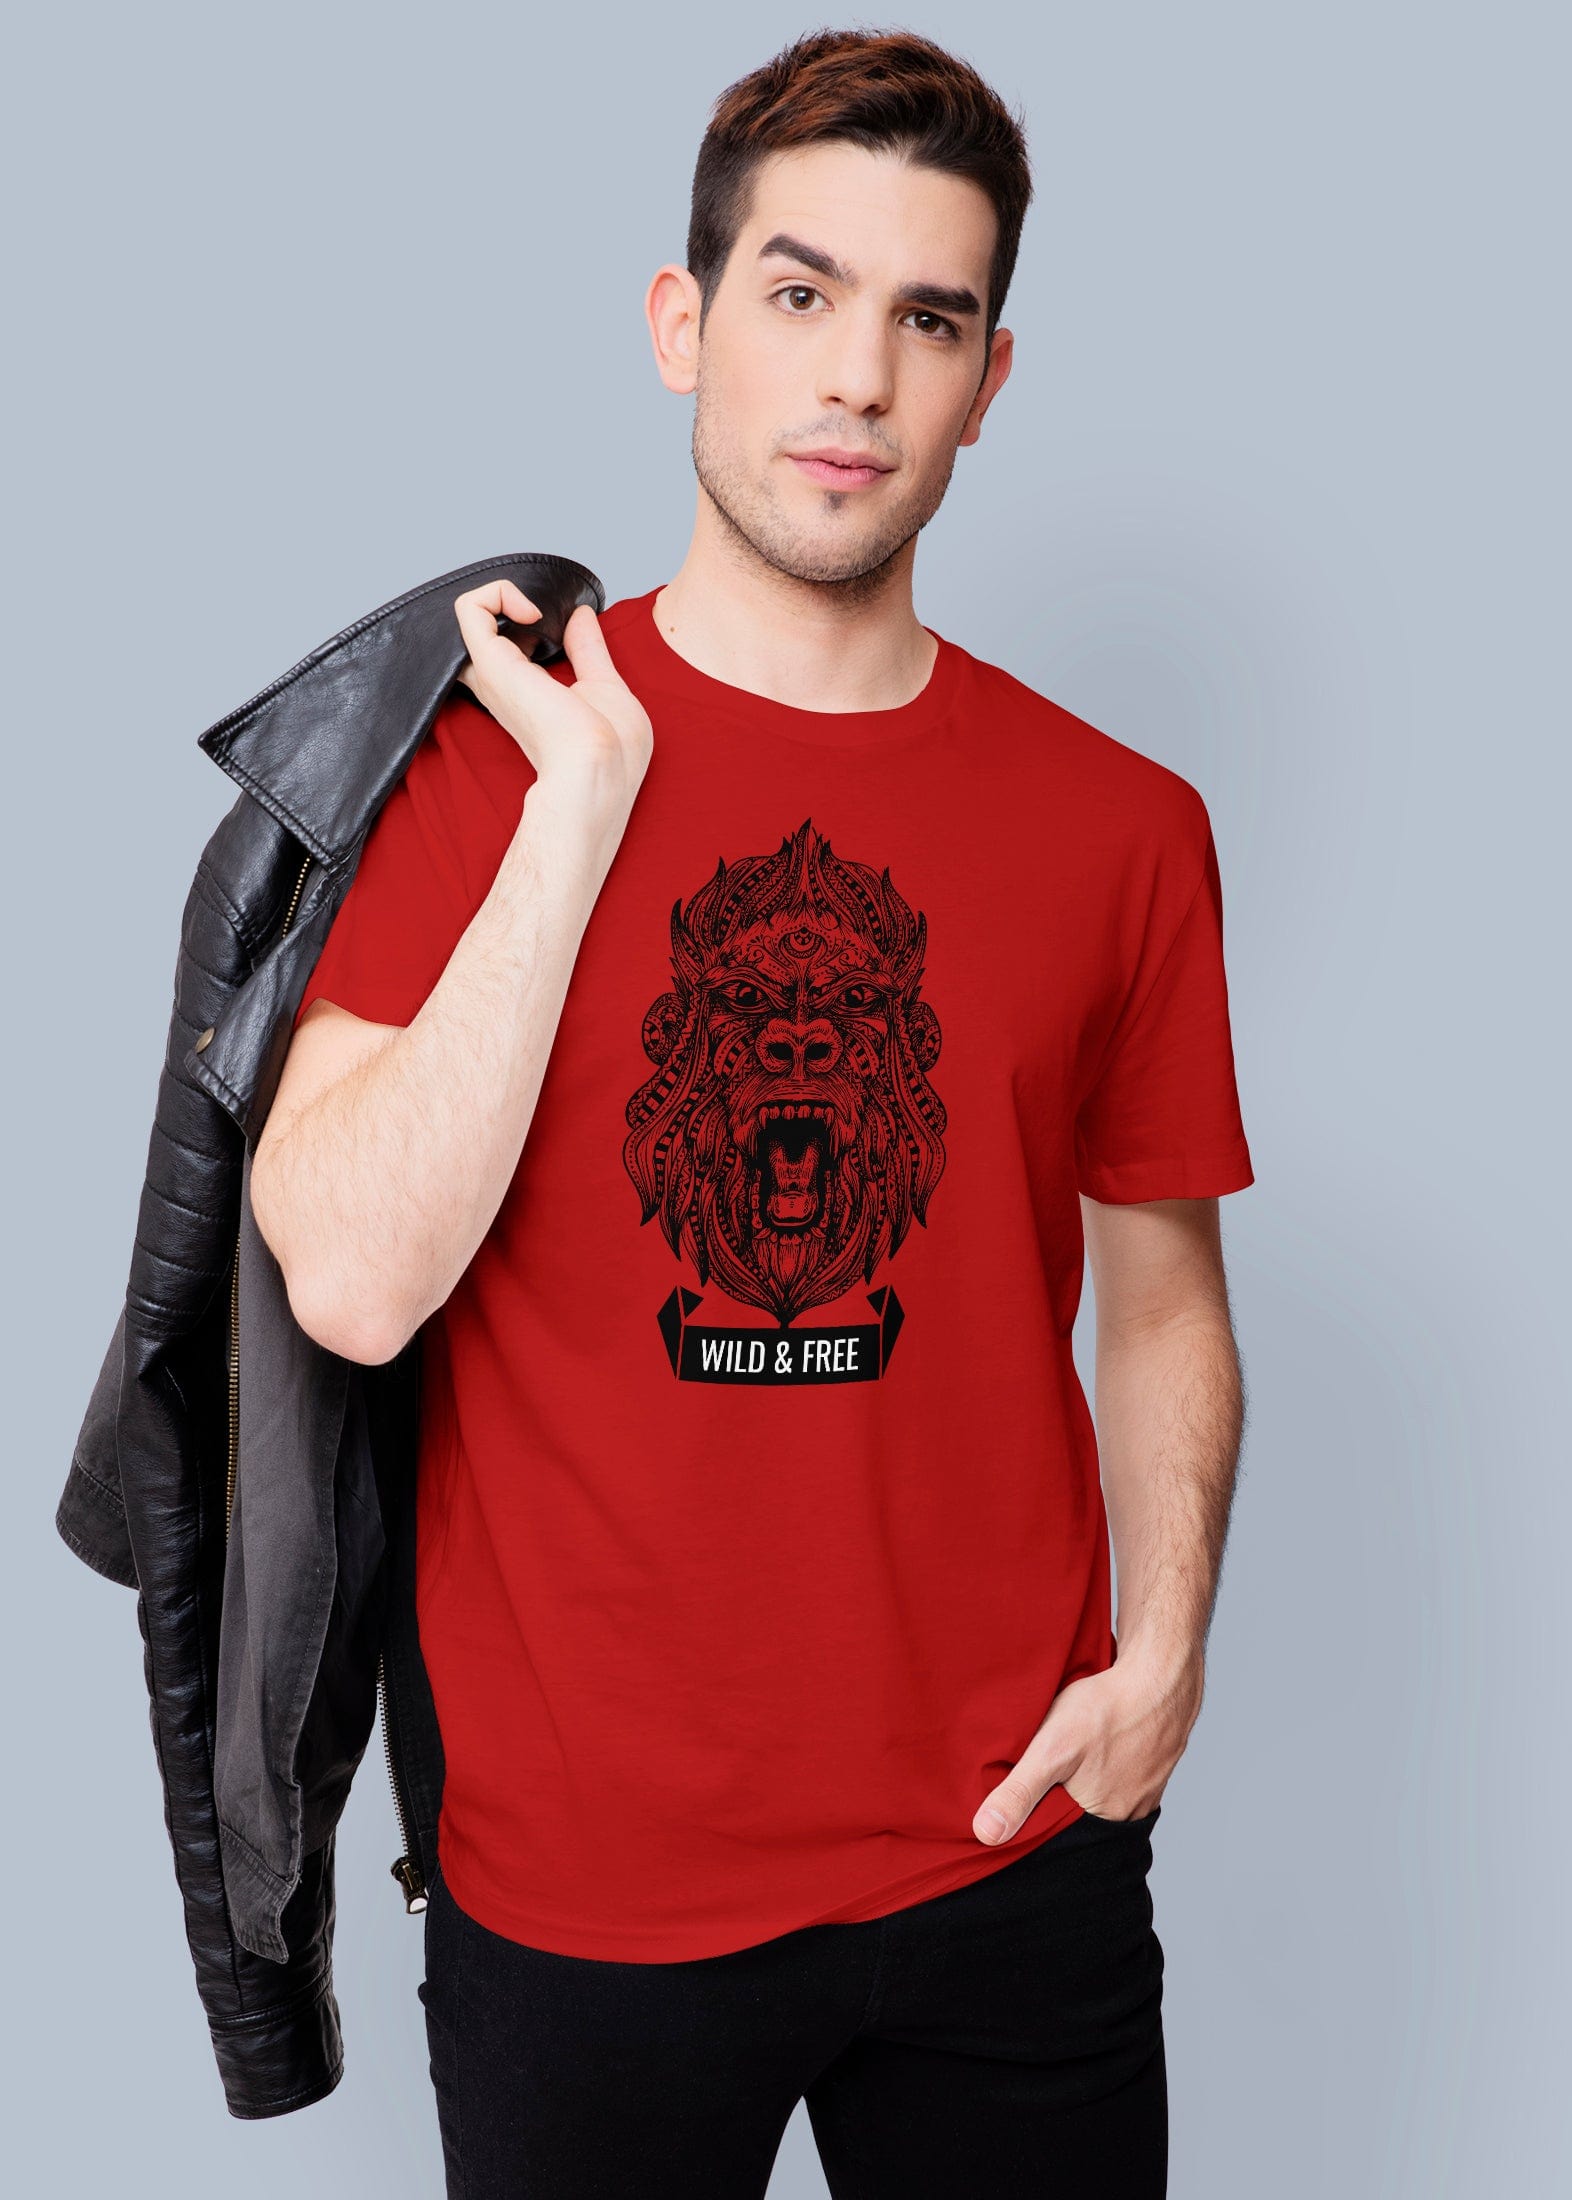 Wild & Free Printed Half Sleeve Premium Cotton T-shirt For Men